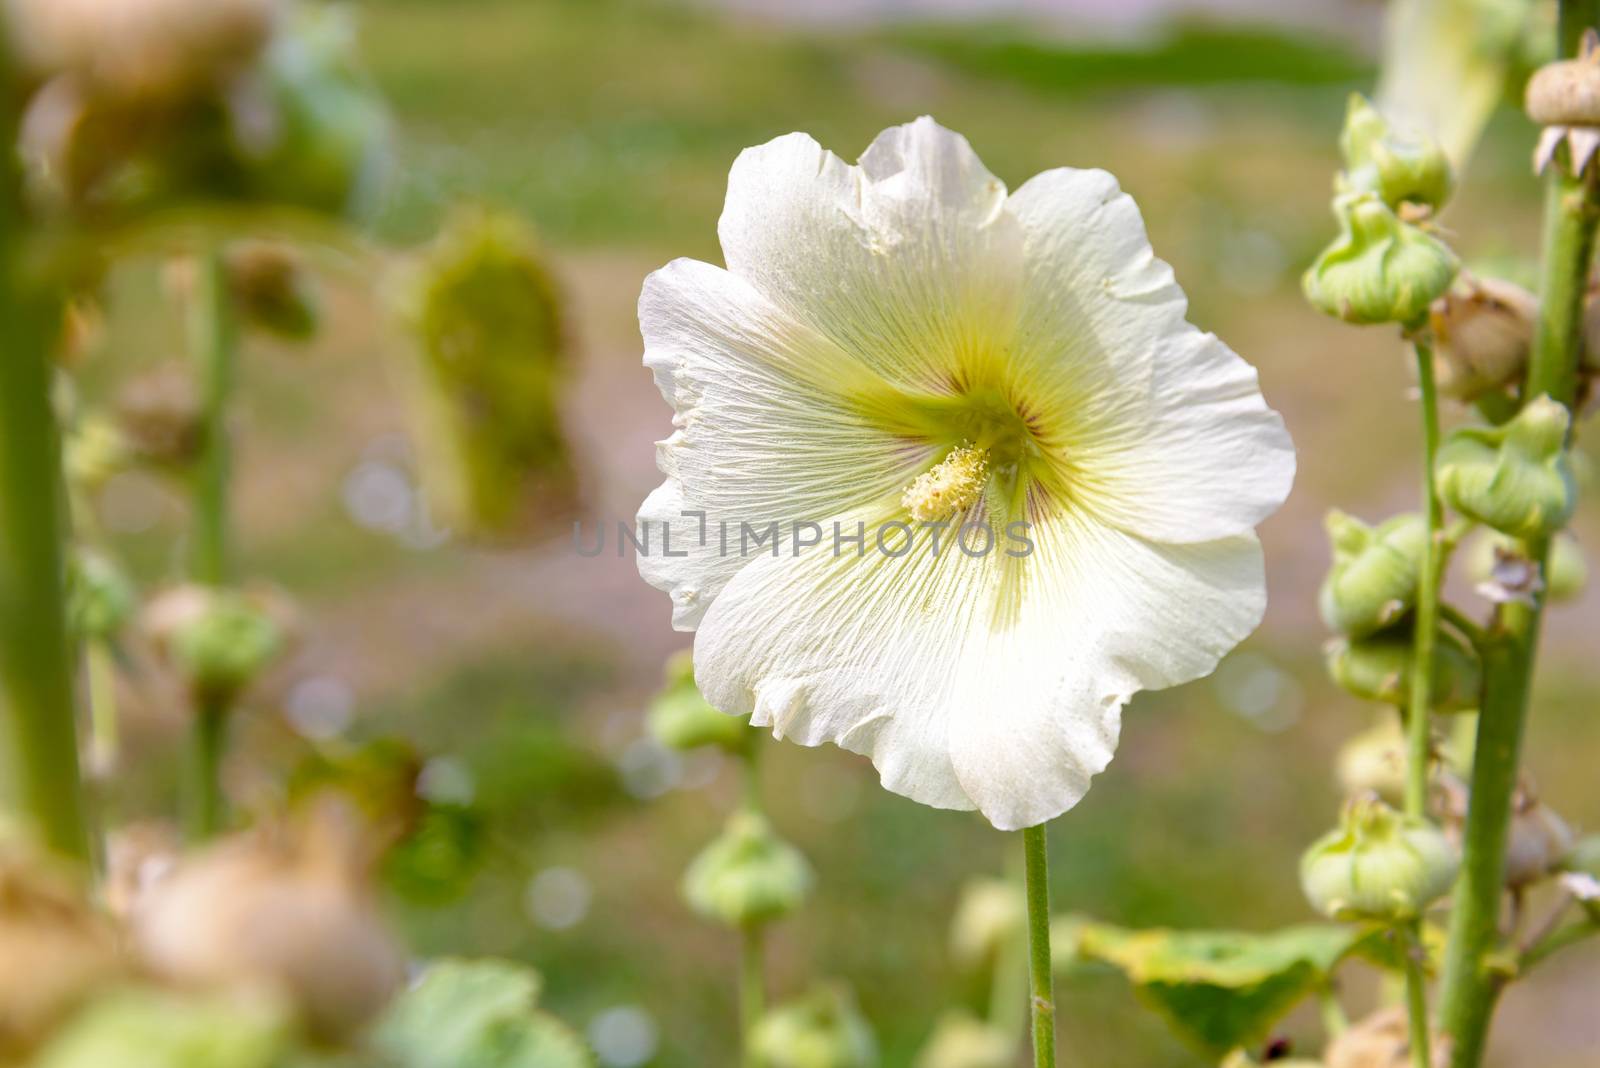 White Alcea Rosea in the garden, growing under the warm summer sun